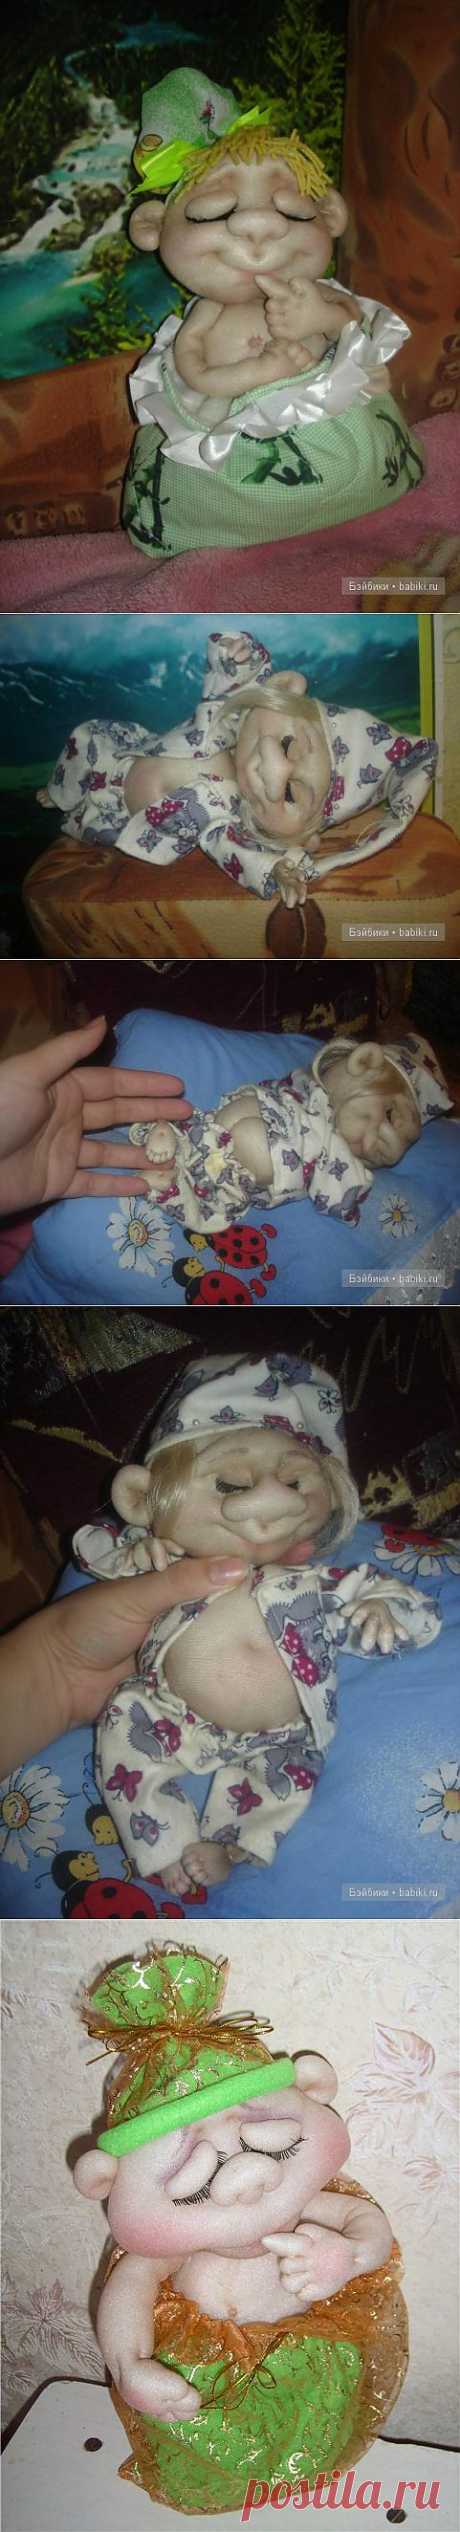 Сплюшики Сонечка и Семочка / Изготовление кукол своими руками / Бэйбики. Куклы фото. Одежда для кукол